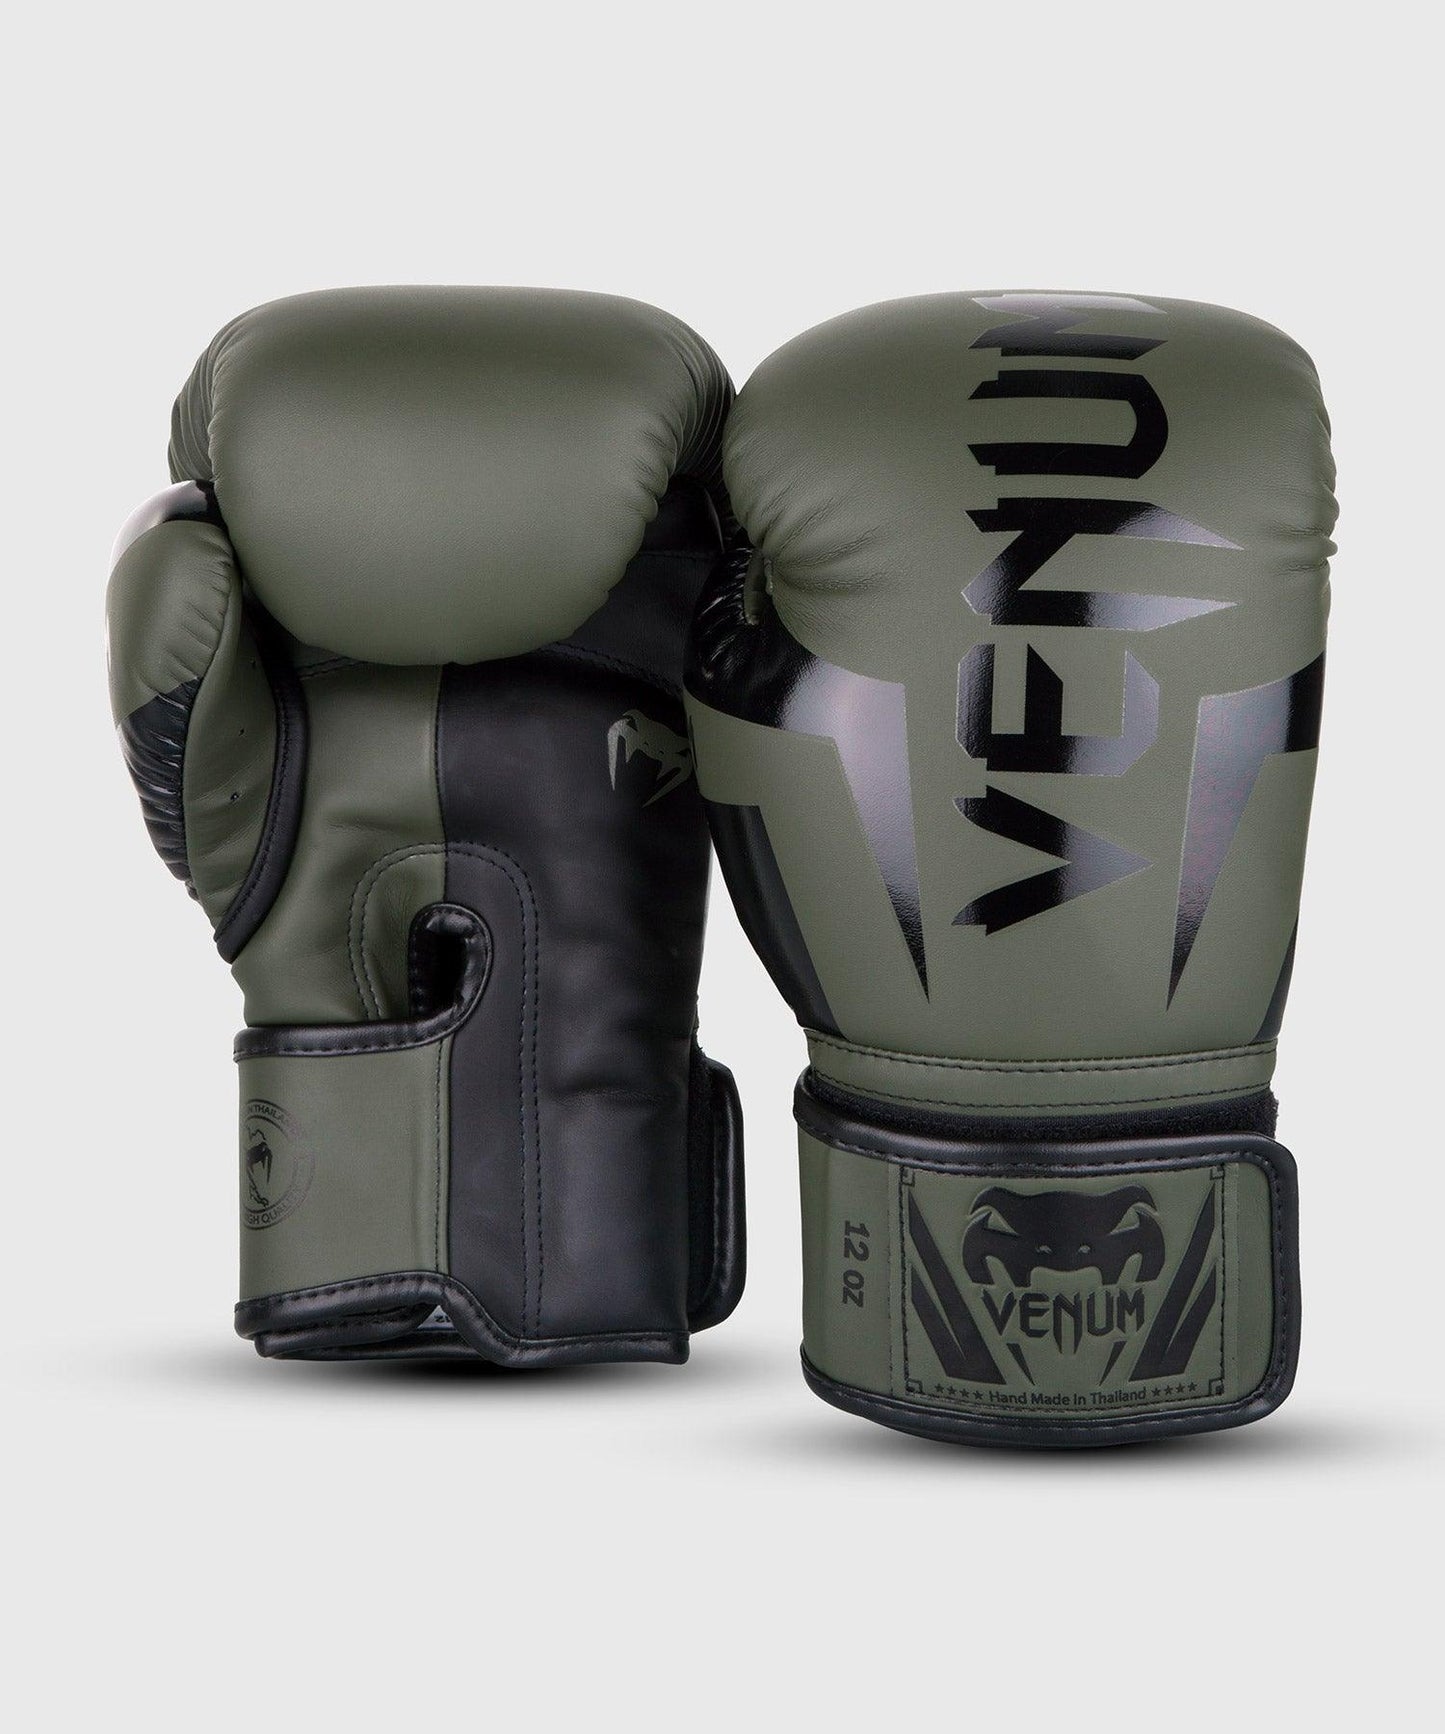 Venum Elite Boxing Gloves - Khaki/Black Picture 2